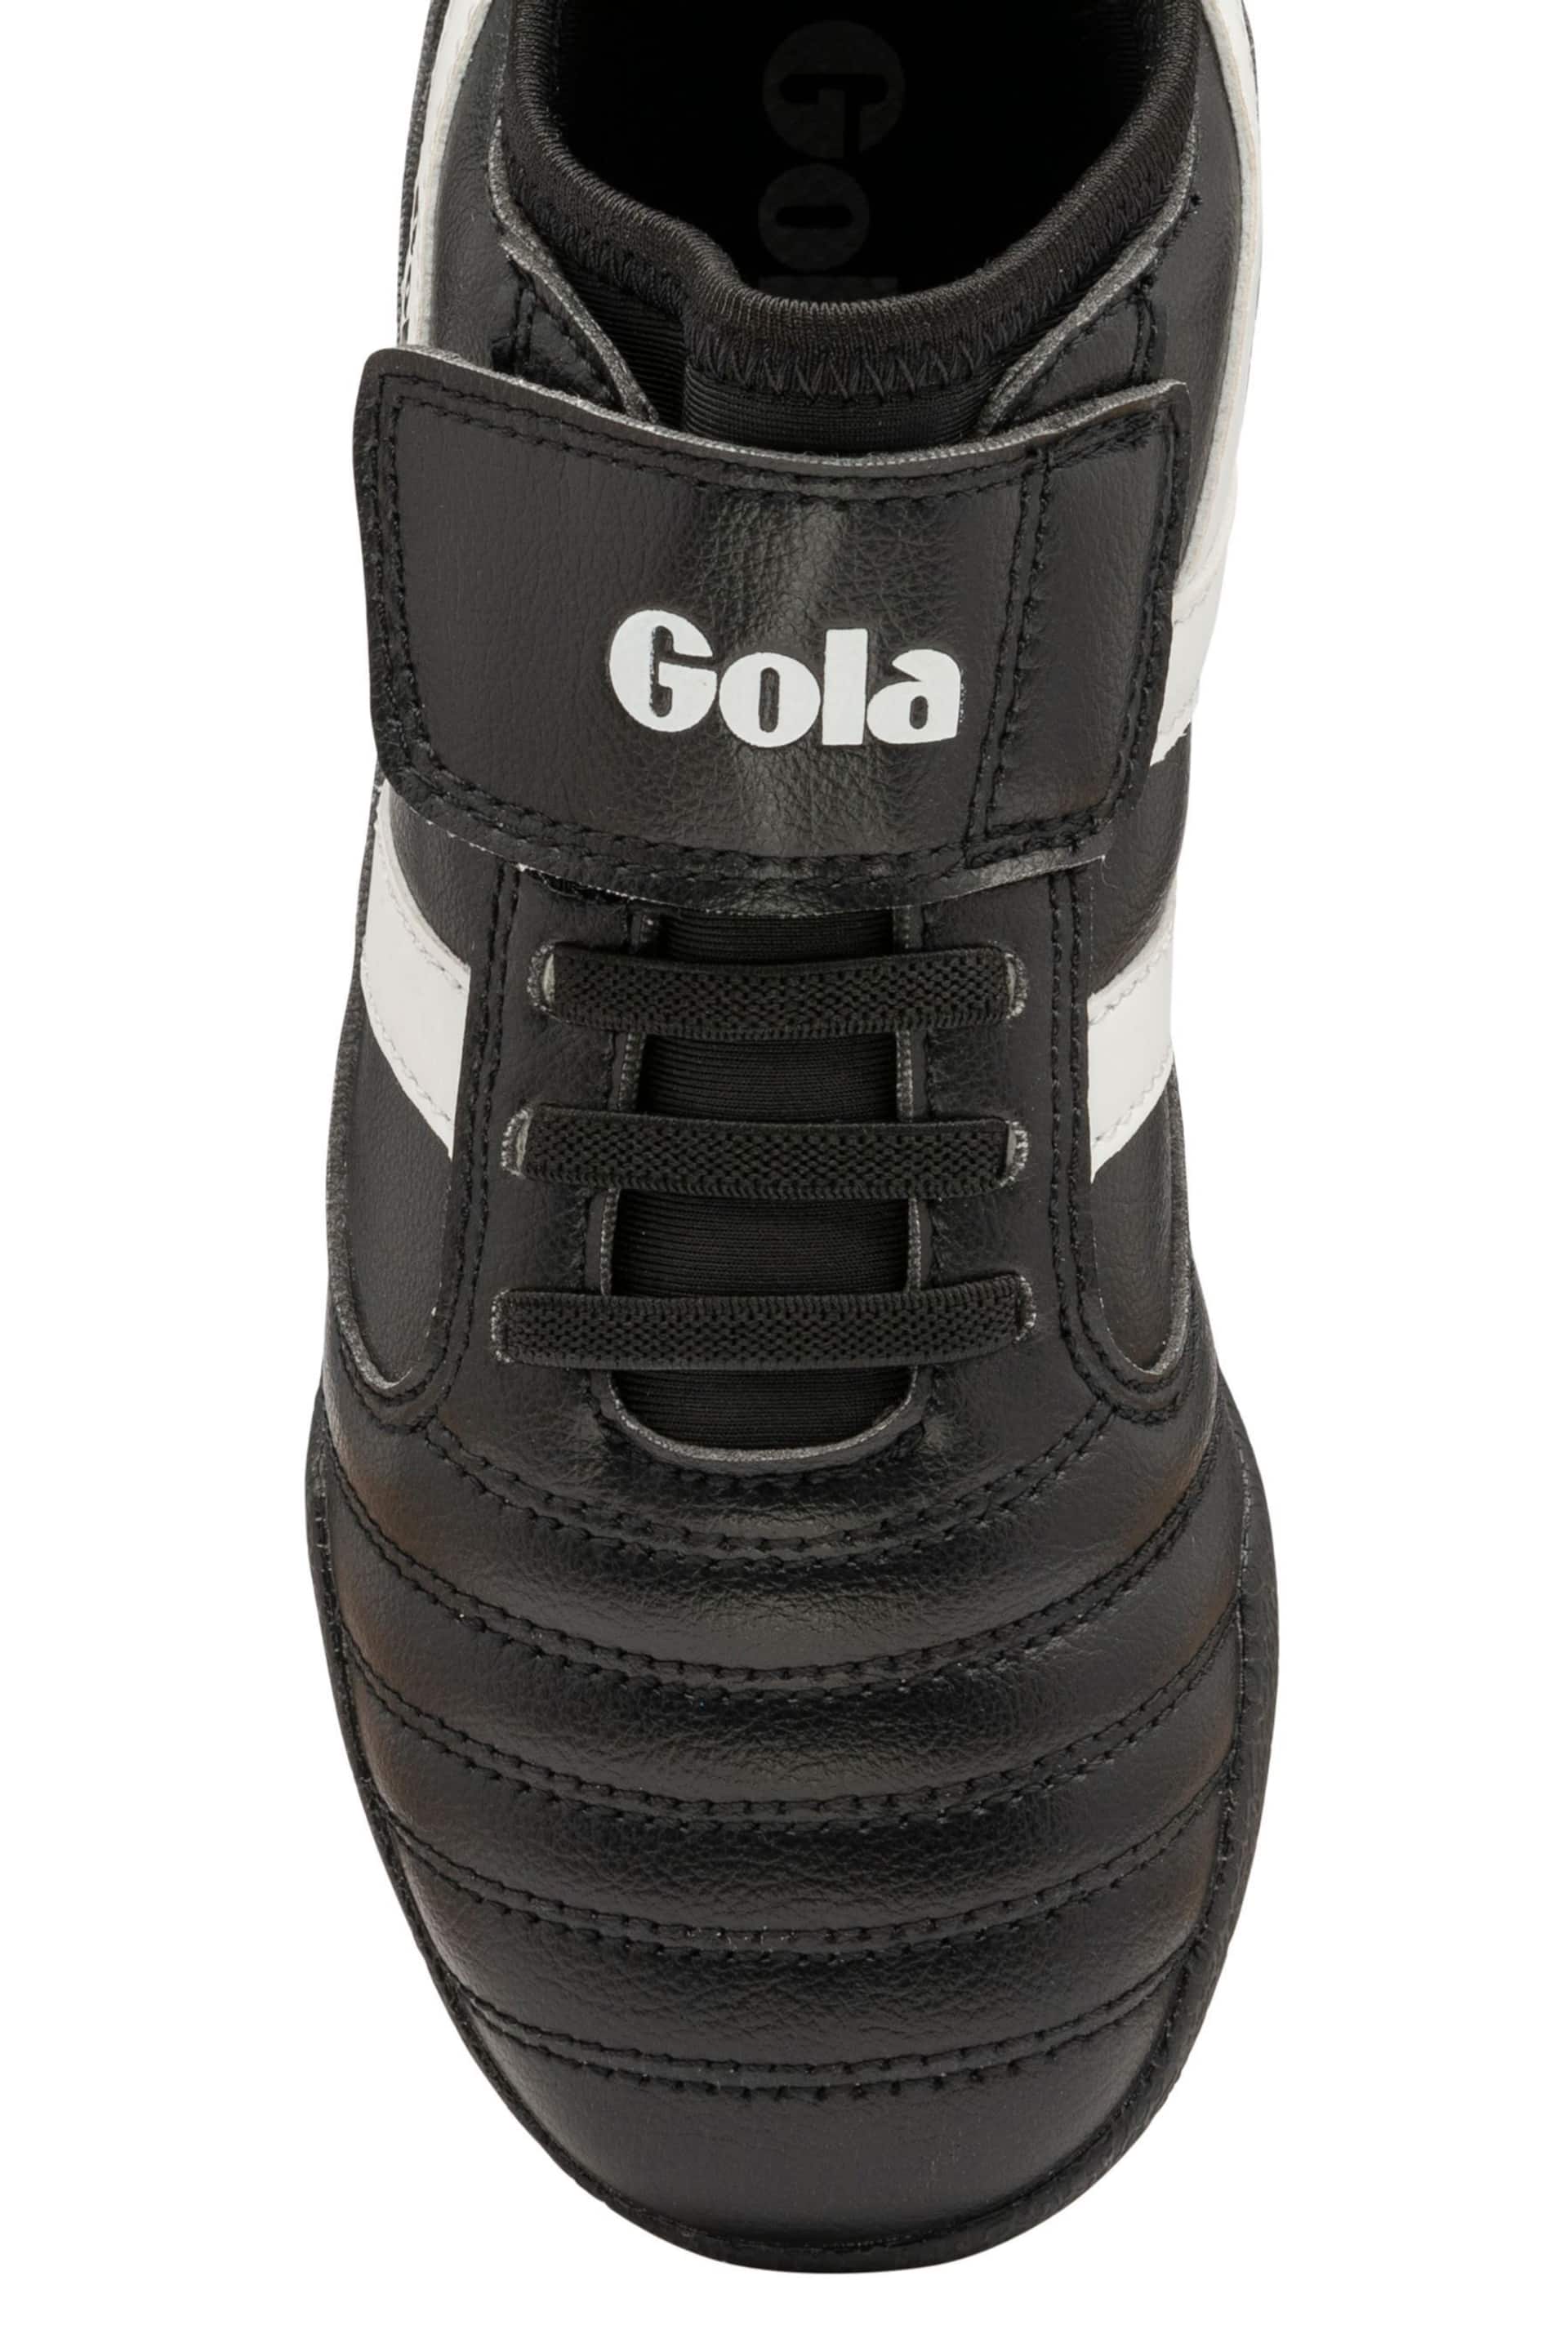 Gola Black/White Kids Ceptor Turf Microfibre Quick Fasten Football Boots - Image 4 of 5